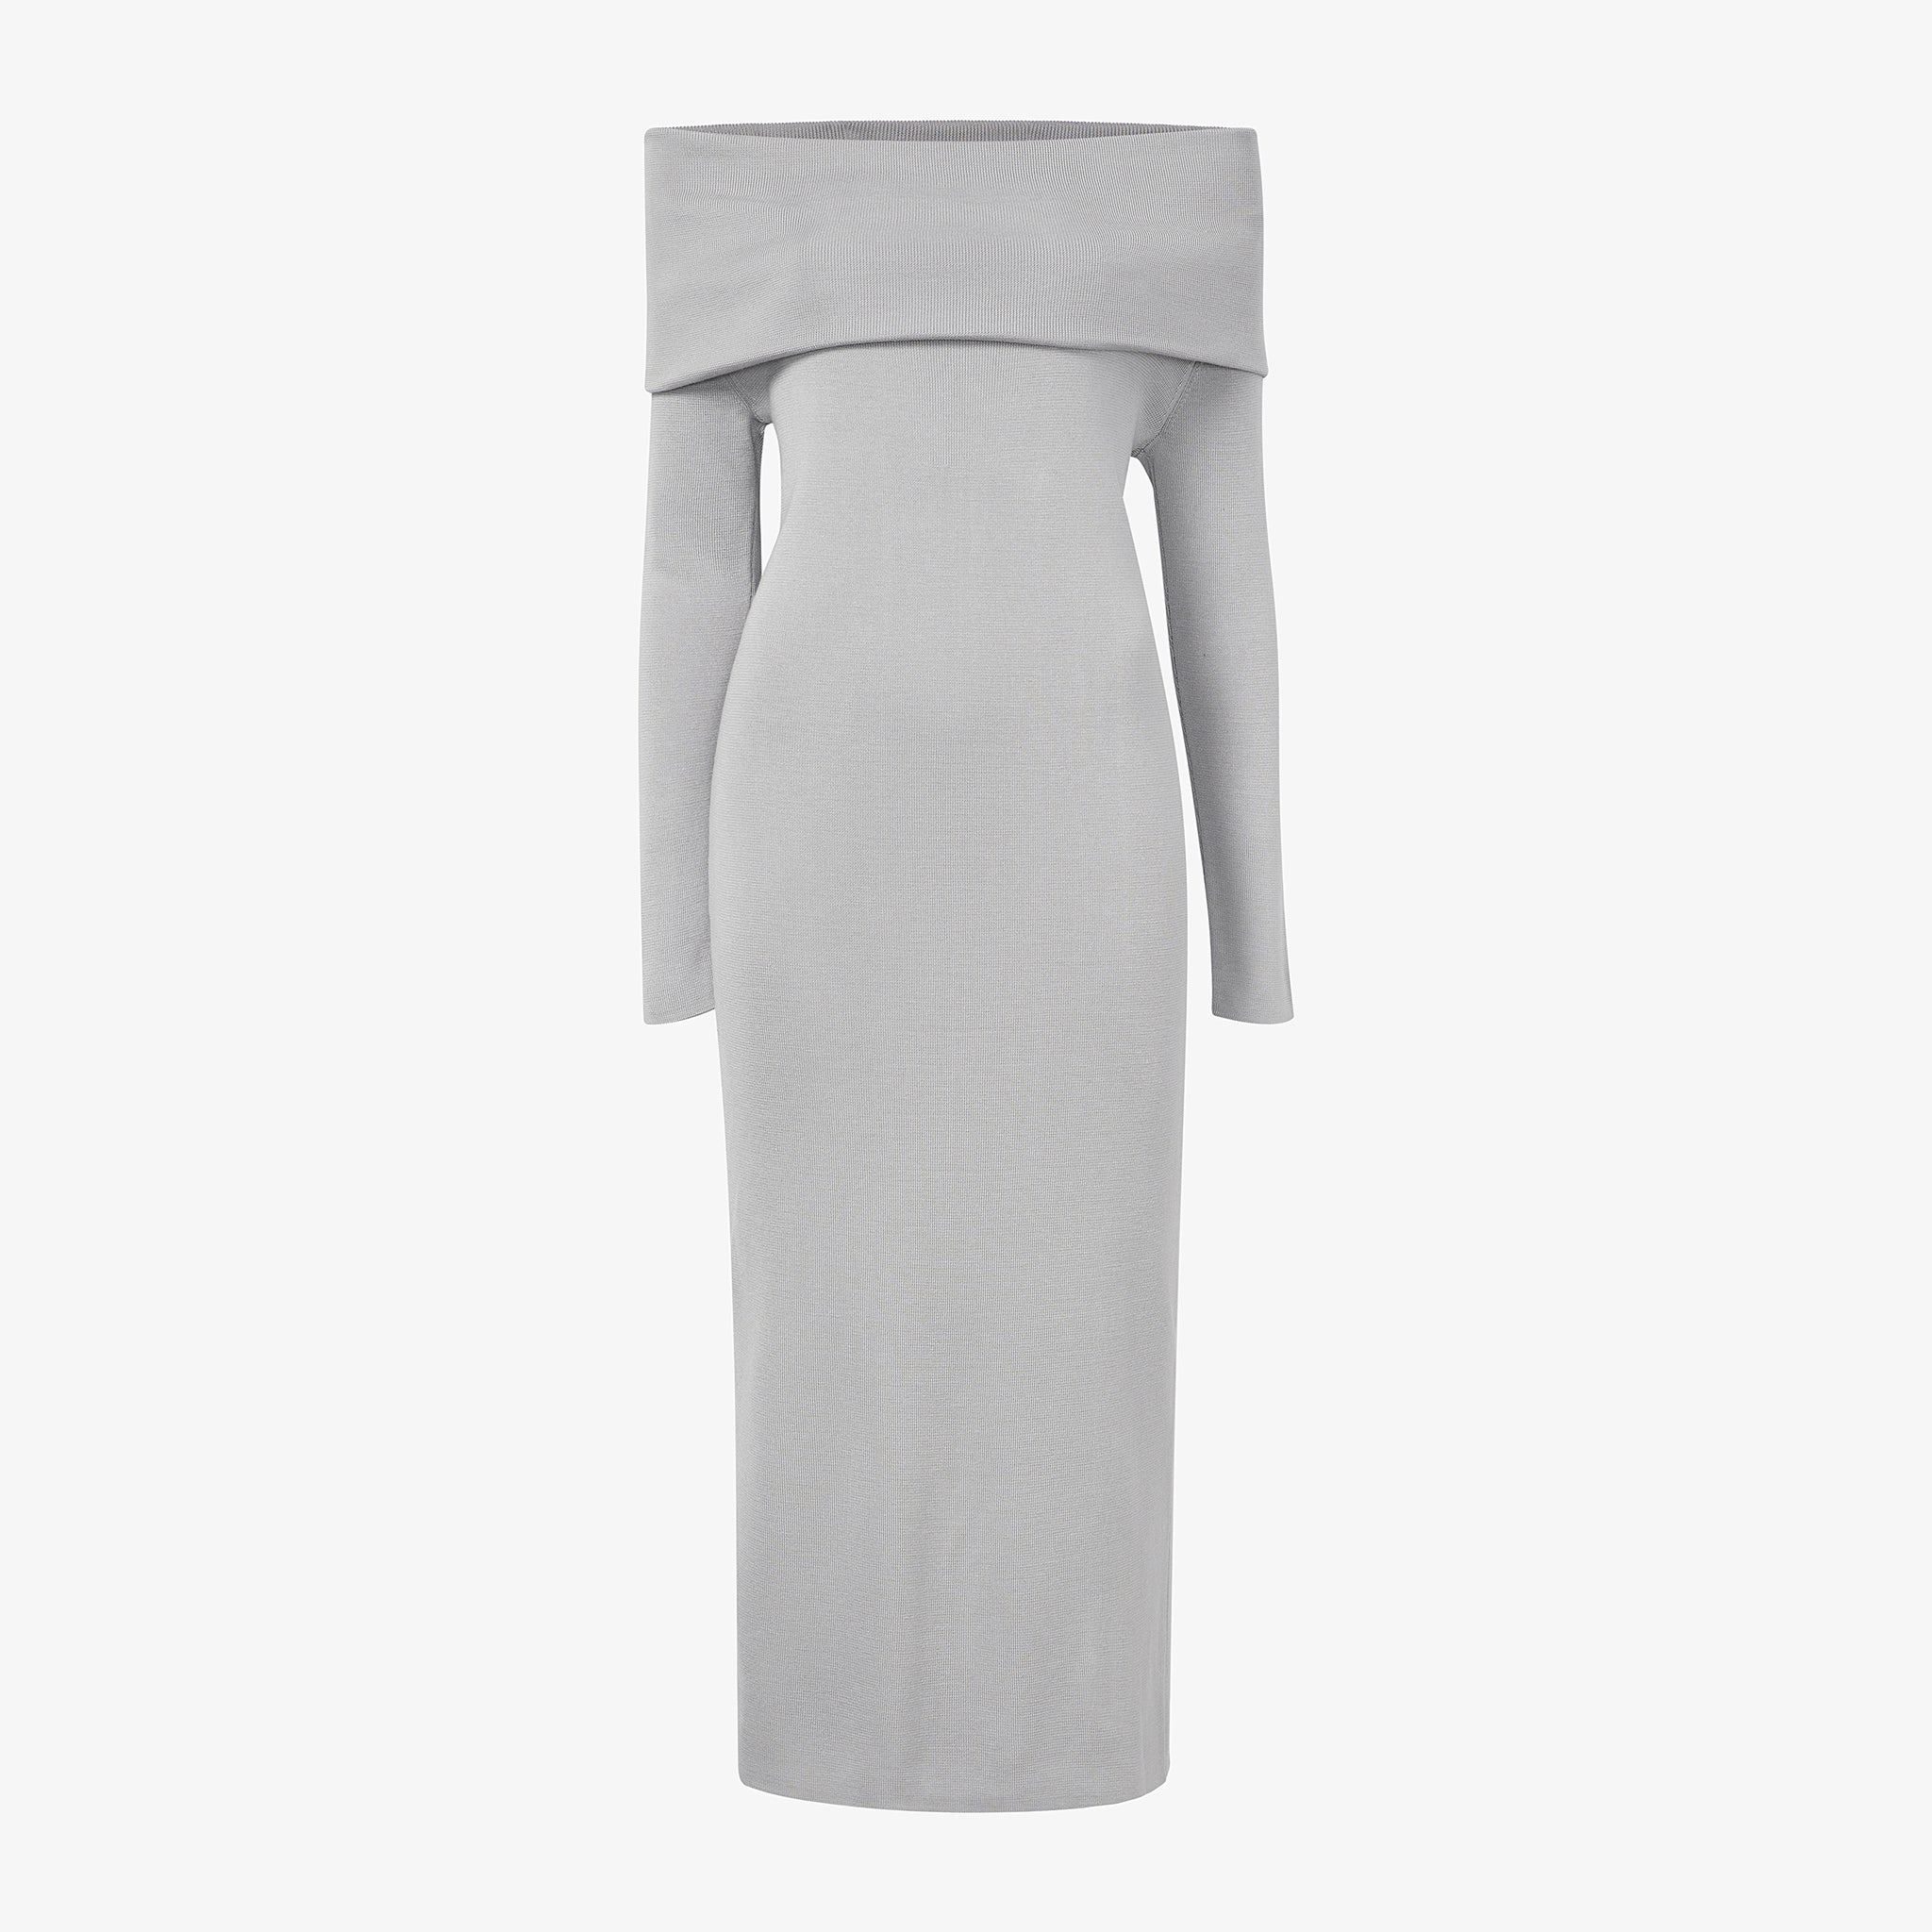 Packshot image of the Lalita Dress - Silk Jersey in Pale Gray